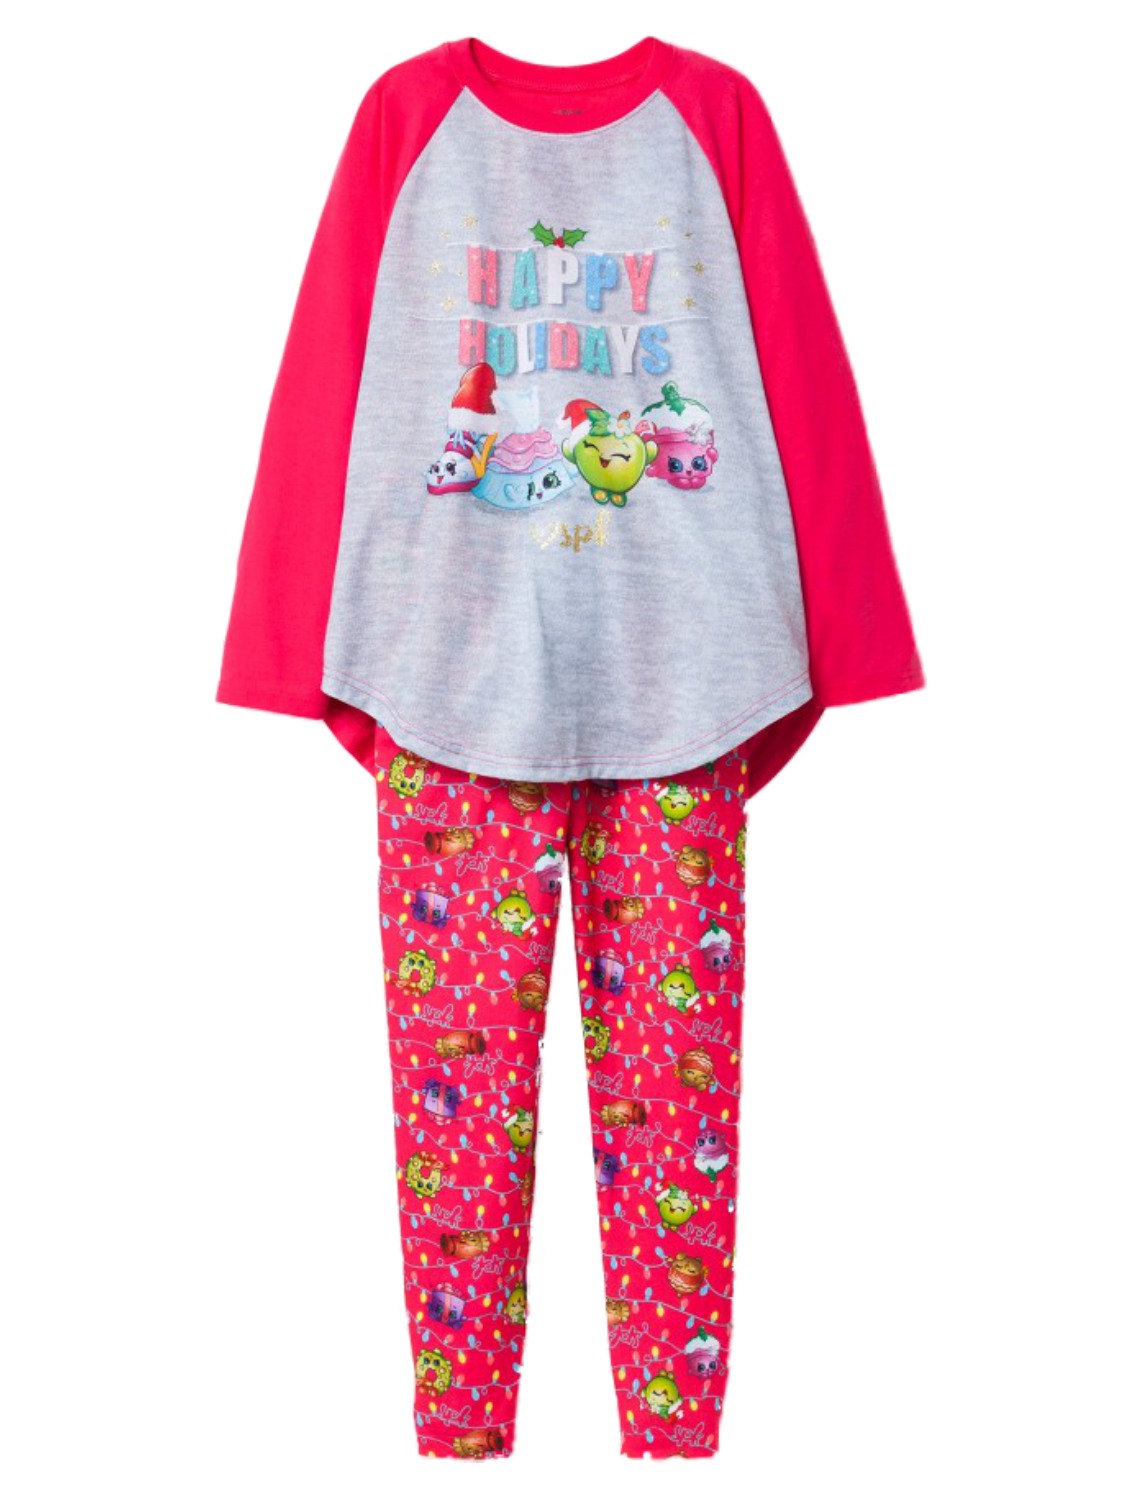 Shopkins Shopkin Girls Sneaky Wedge Apple Blossom Cupcake Chic Pajamas Sleep Set